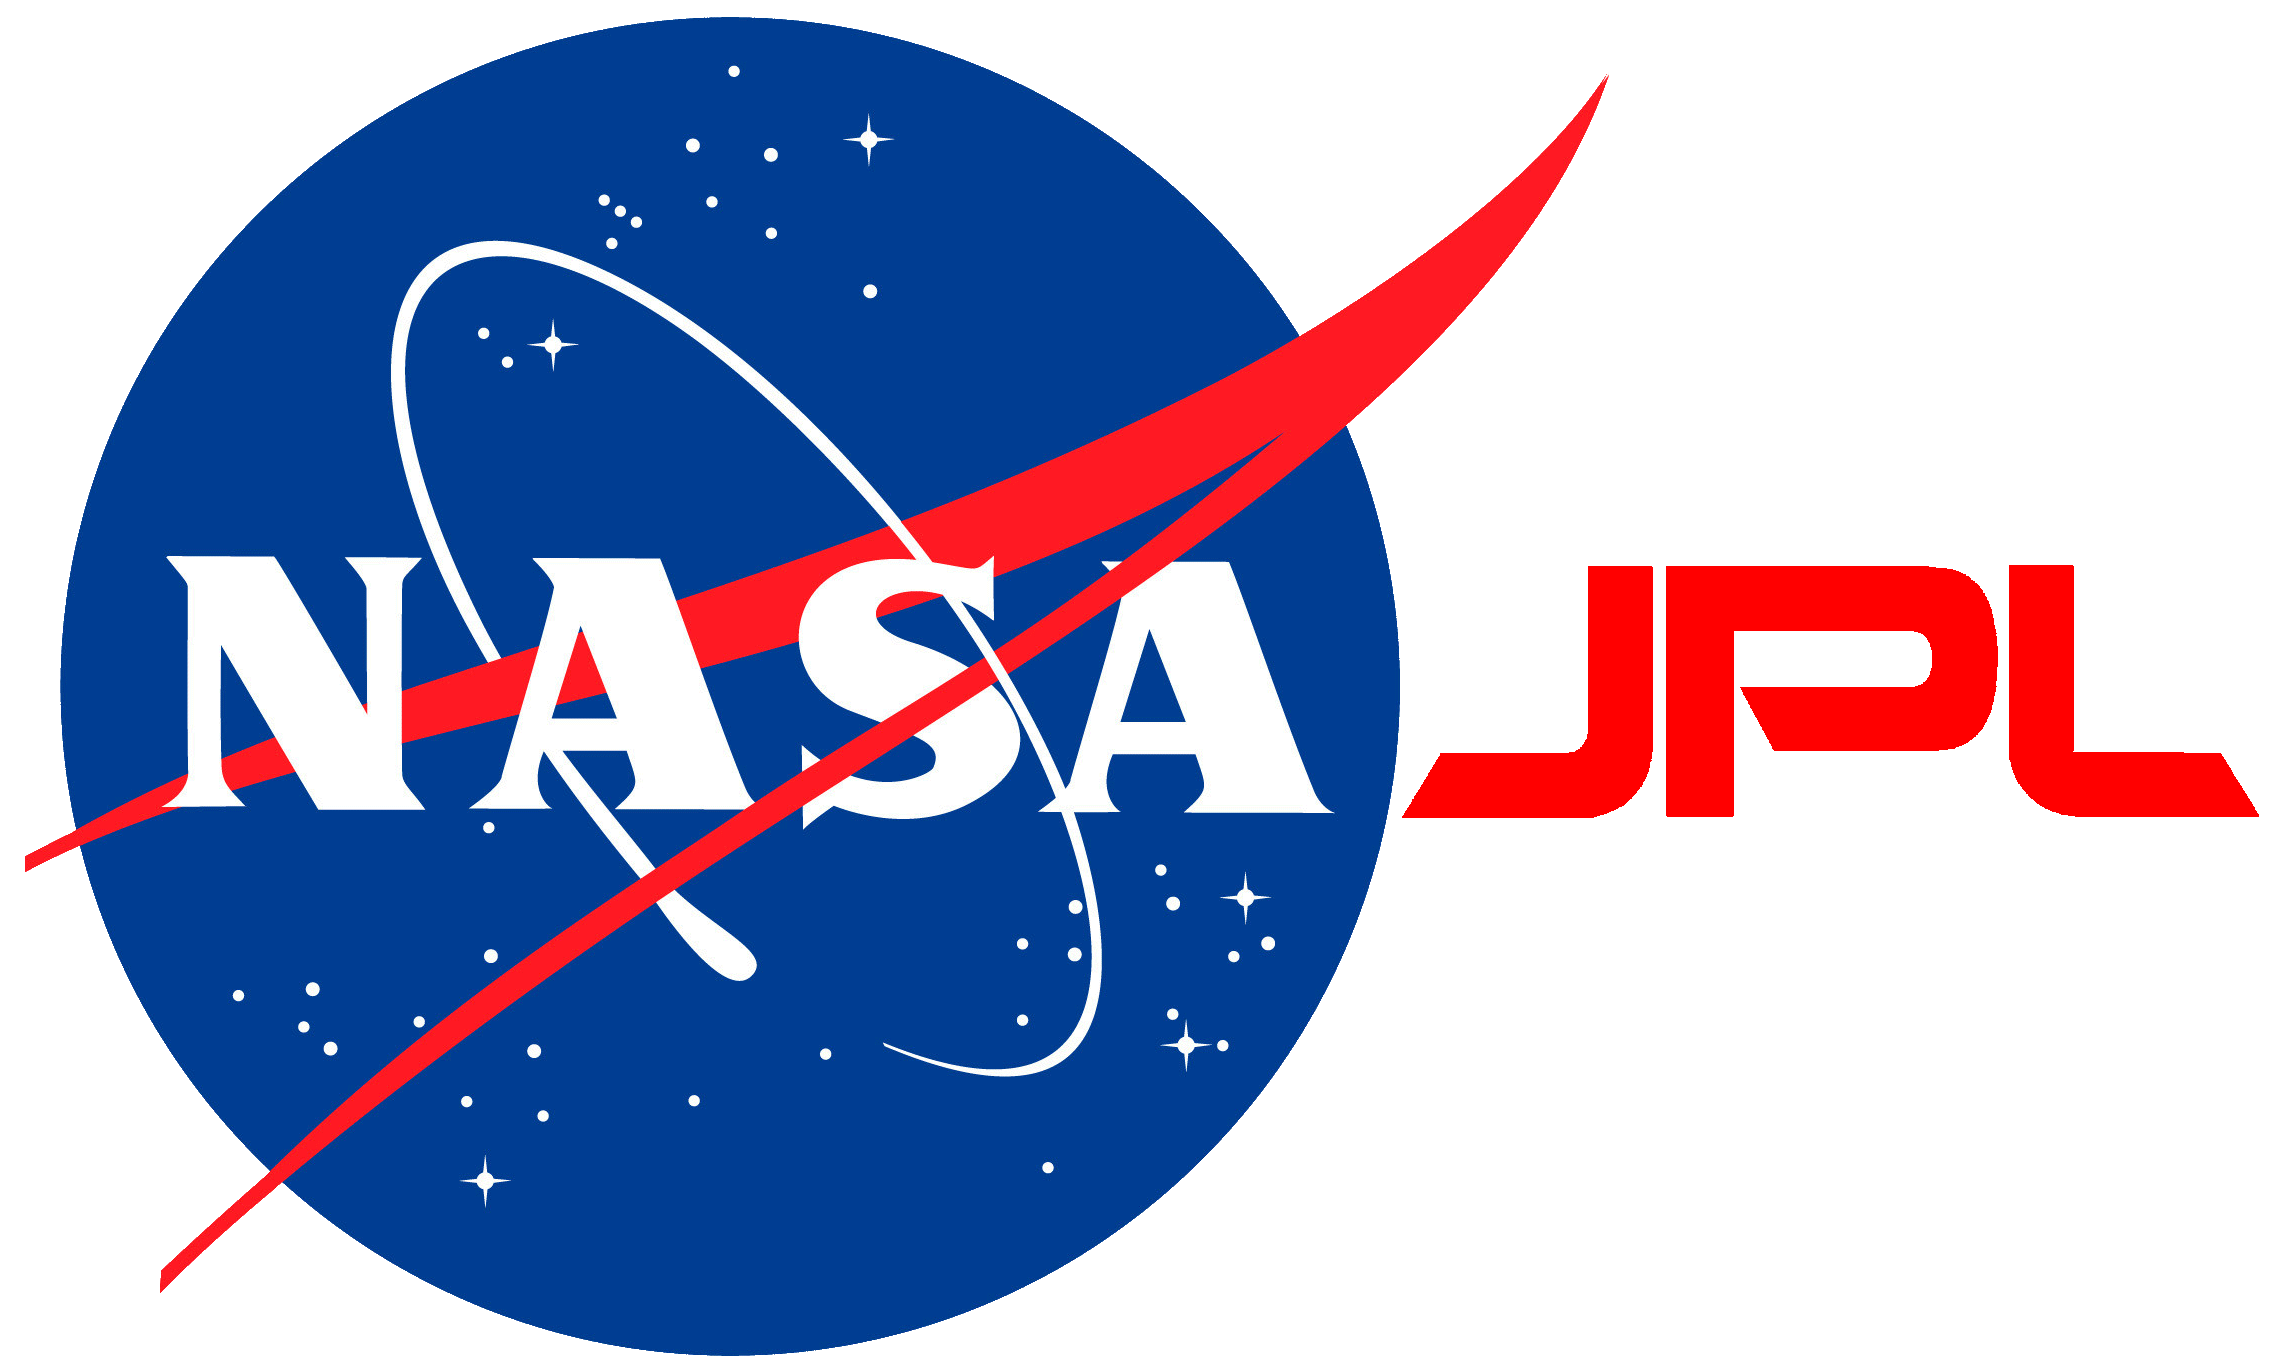 JPL (Jet Propulsion Laboratory Radar Science and Engineering Section) NASA, Pasadena, CA, USA